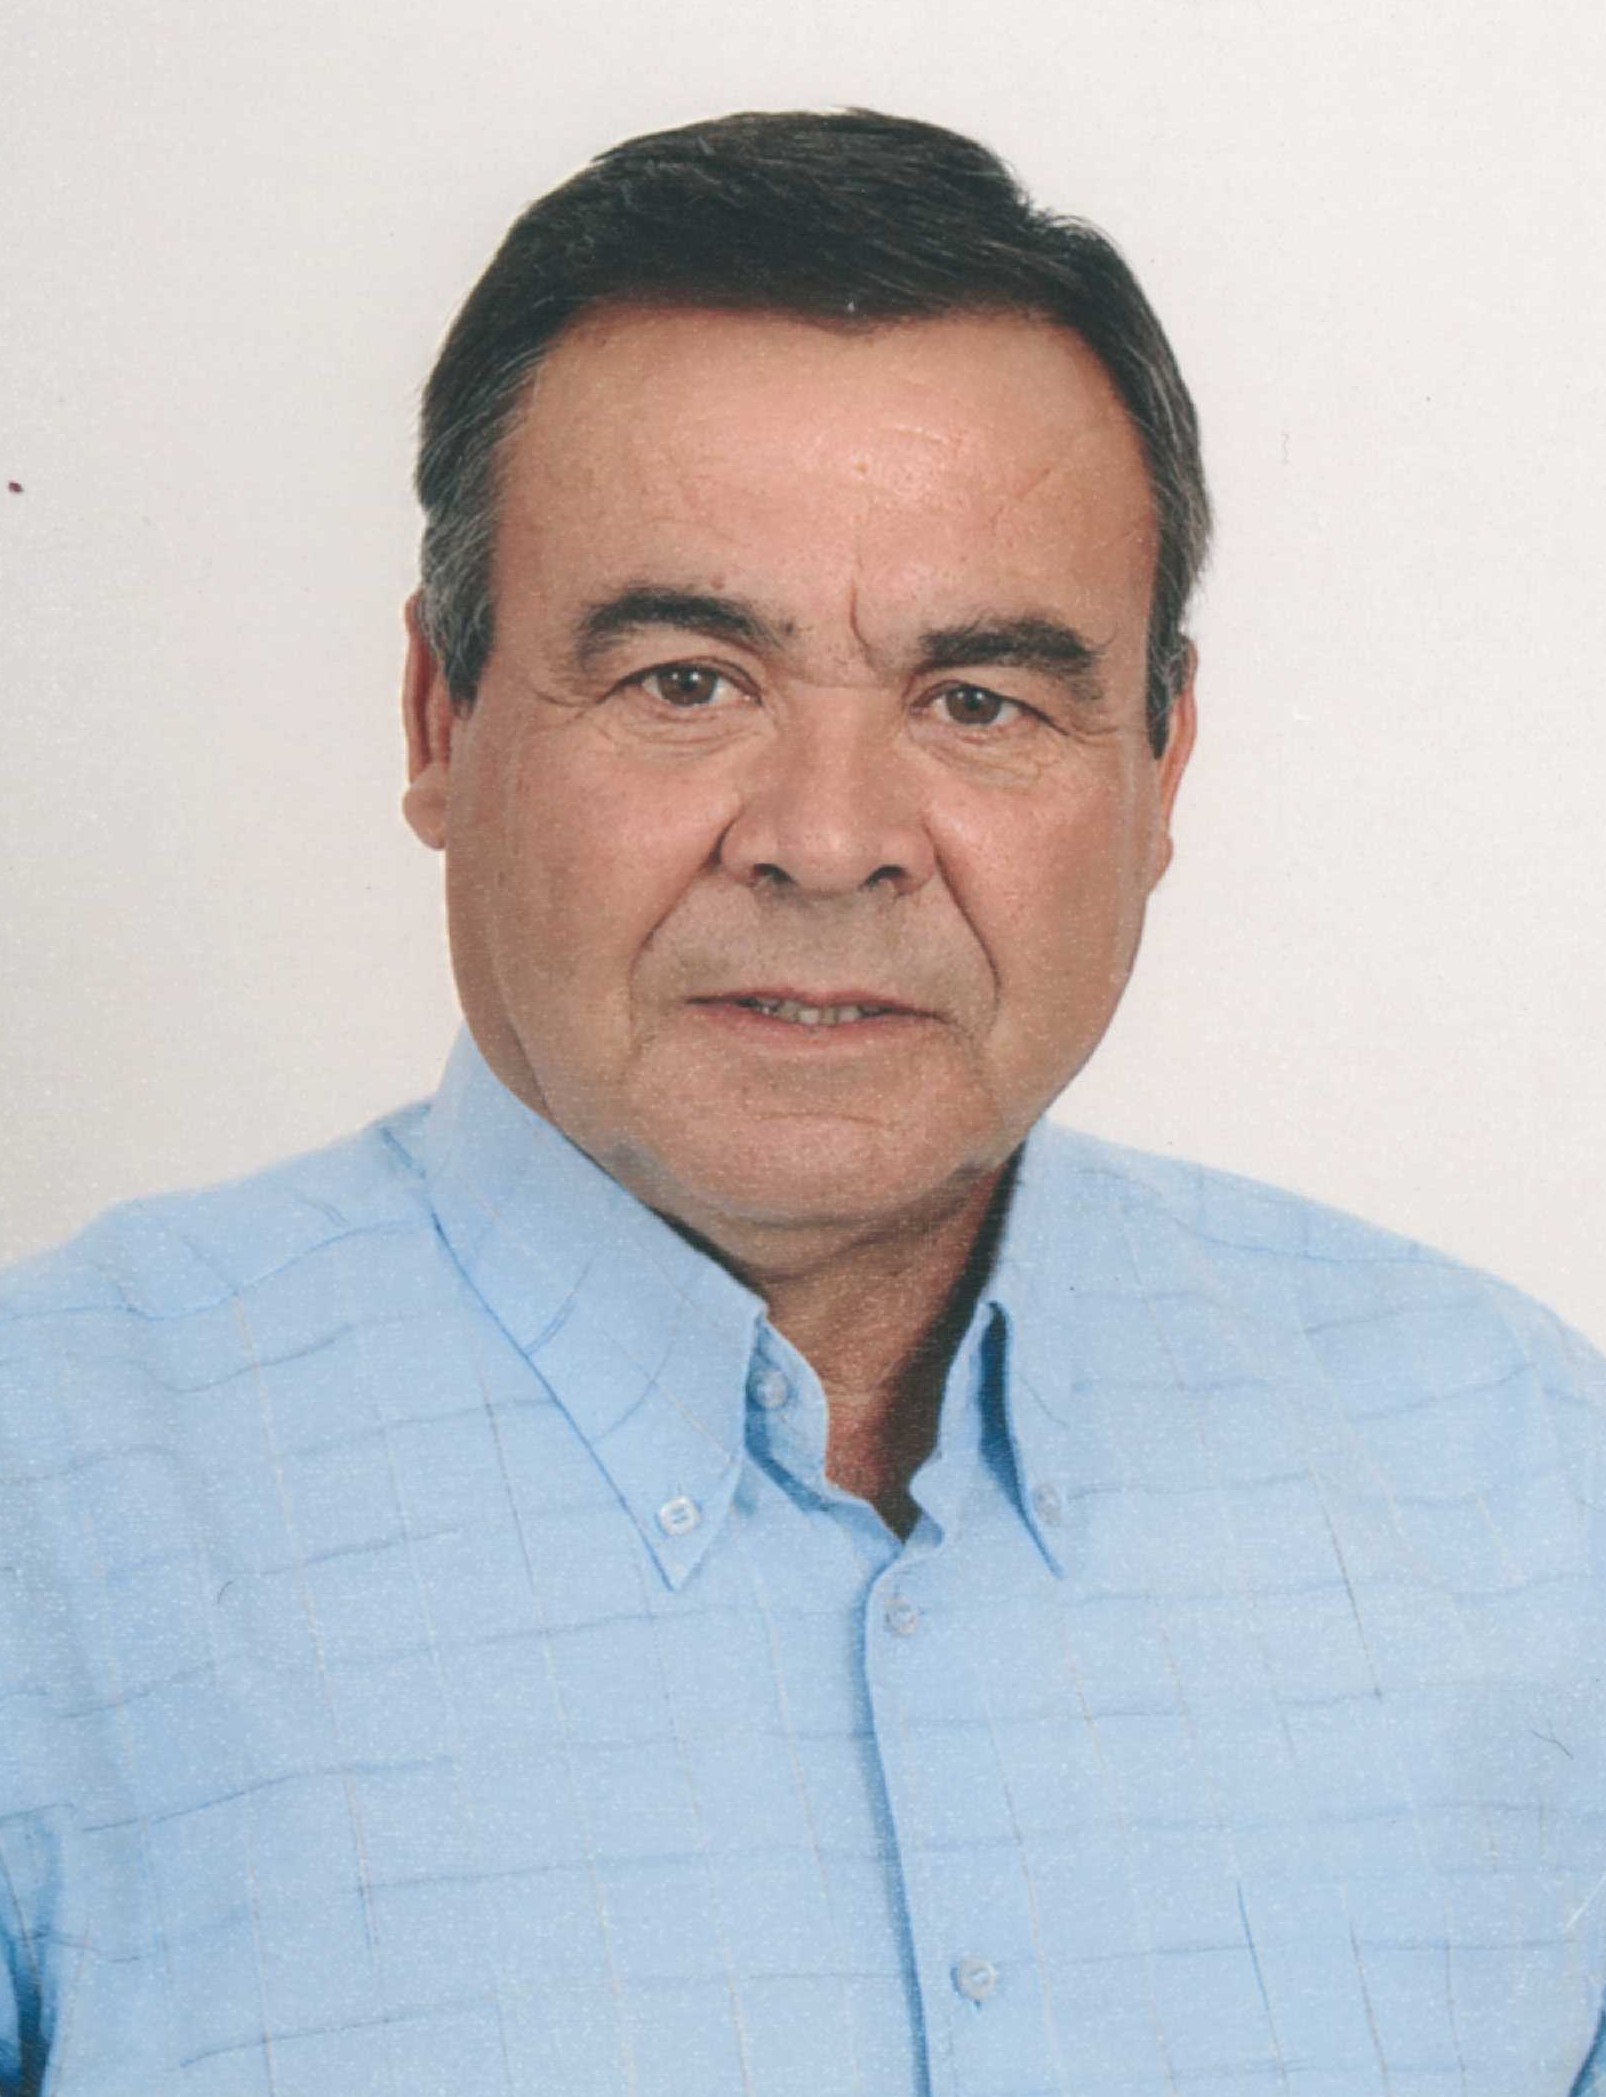 Vitalino José Santa Rita Pereira